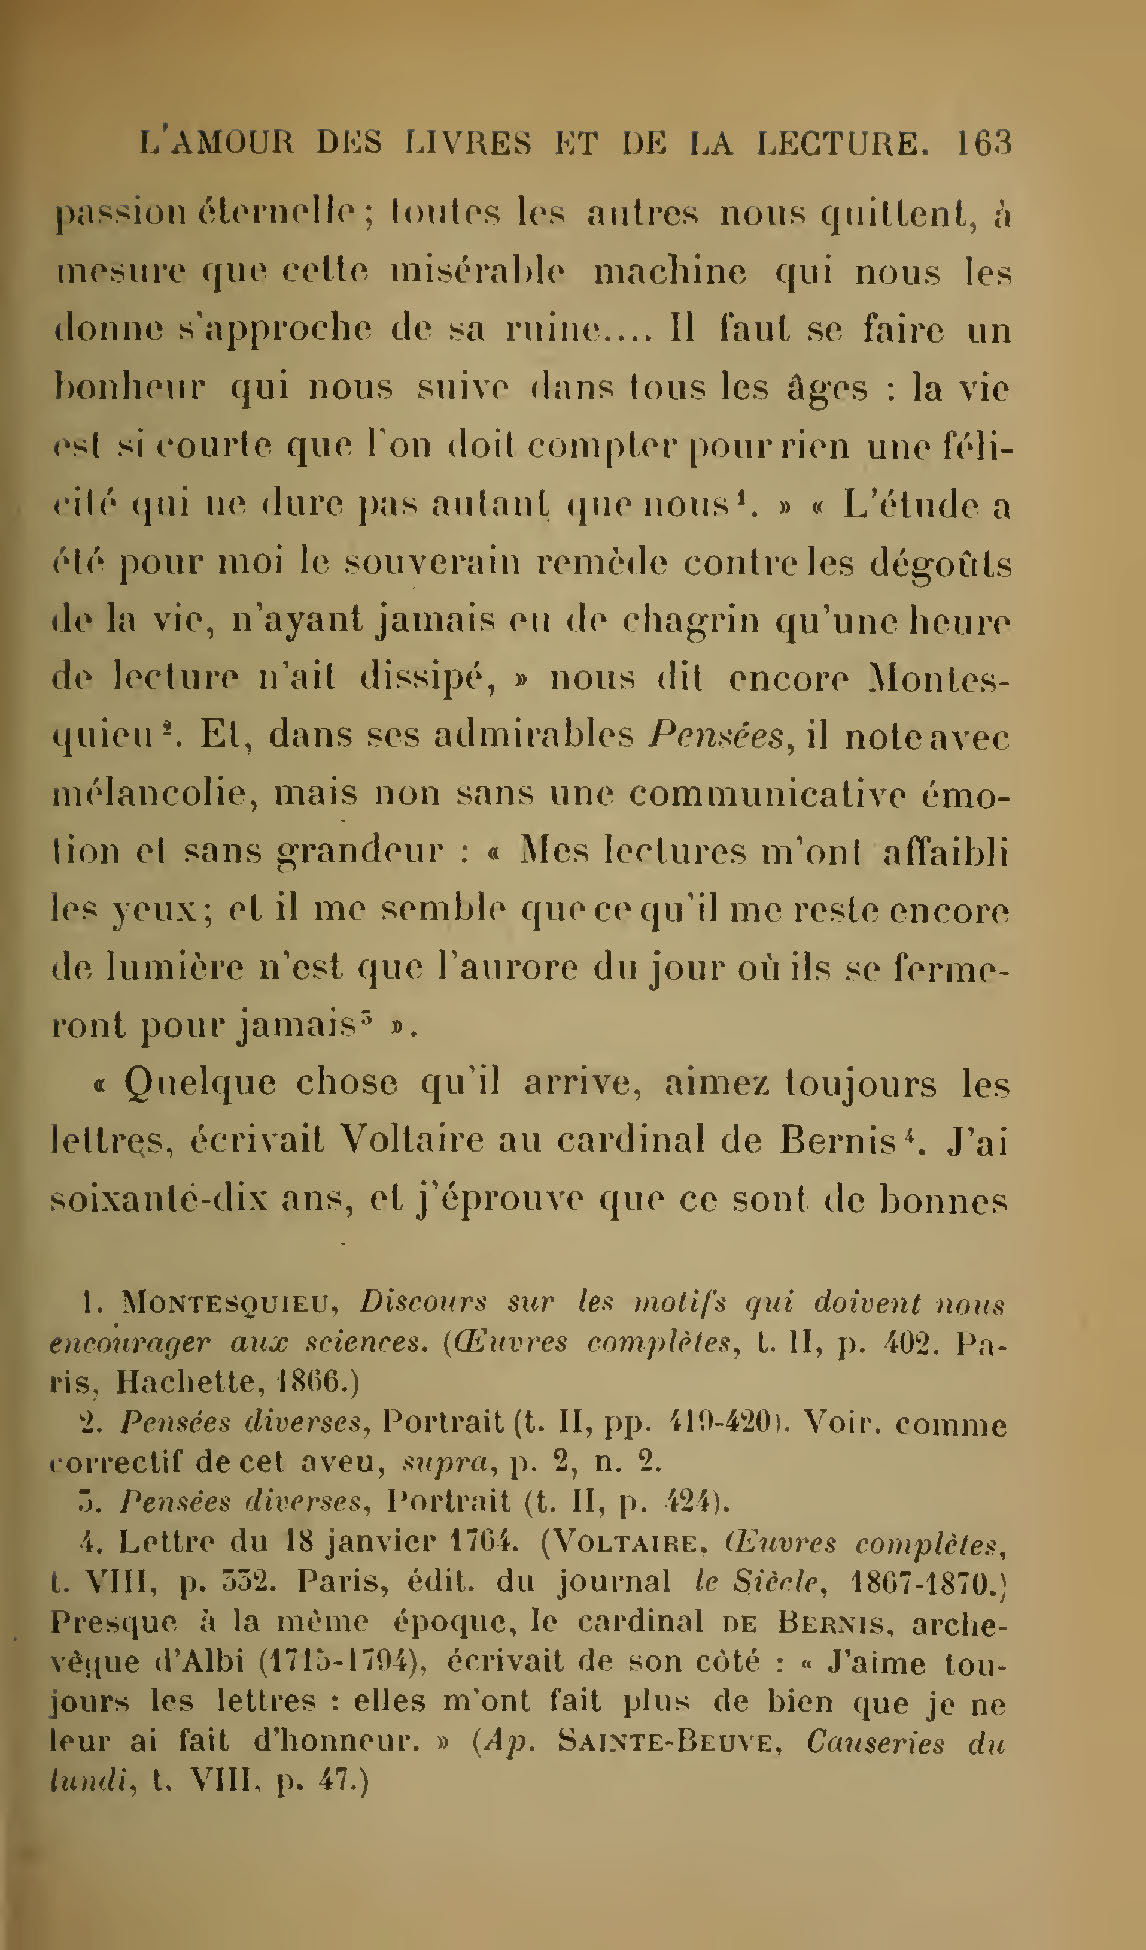 Albert Cim, Le Livre, t. I, p. 163.